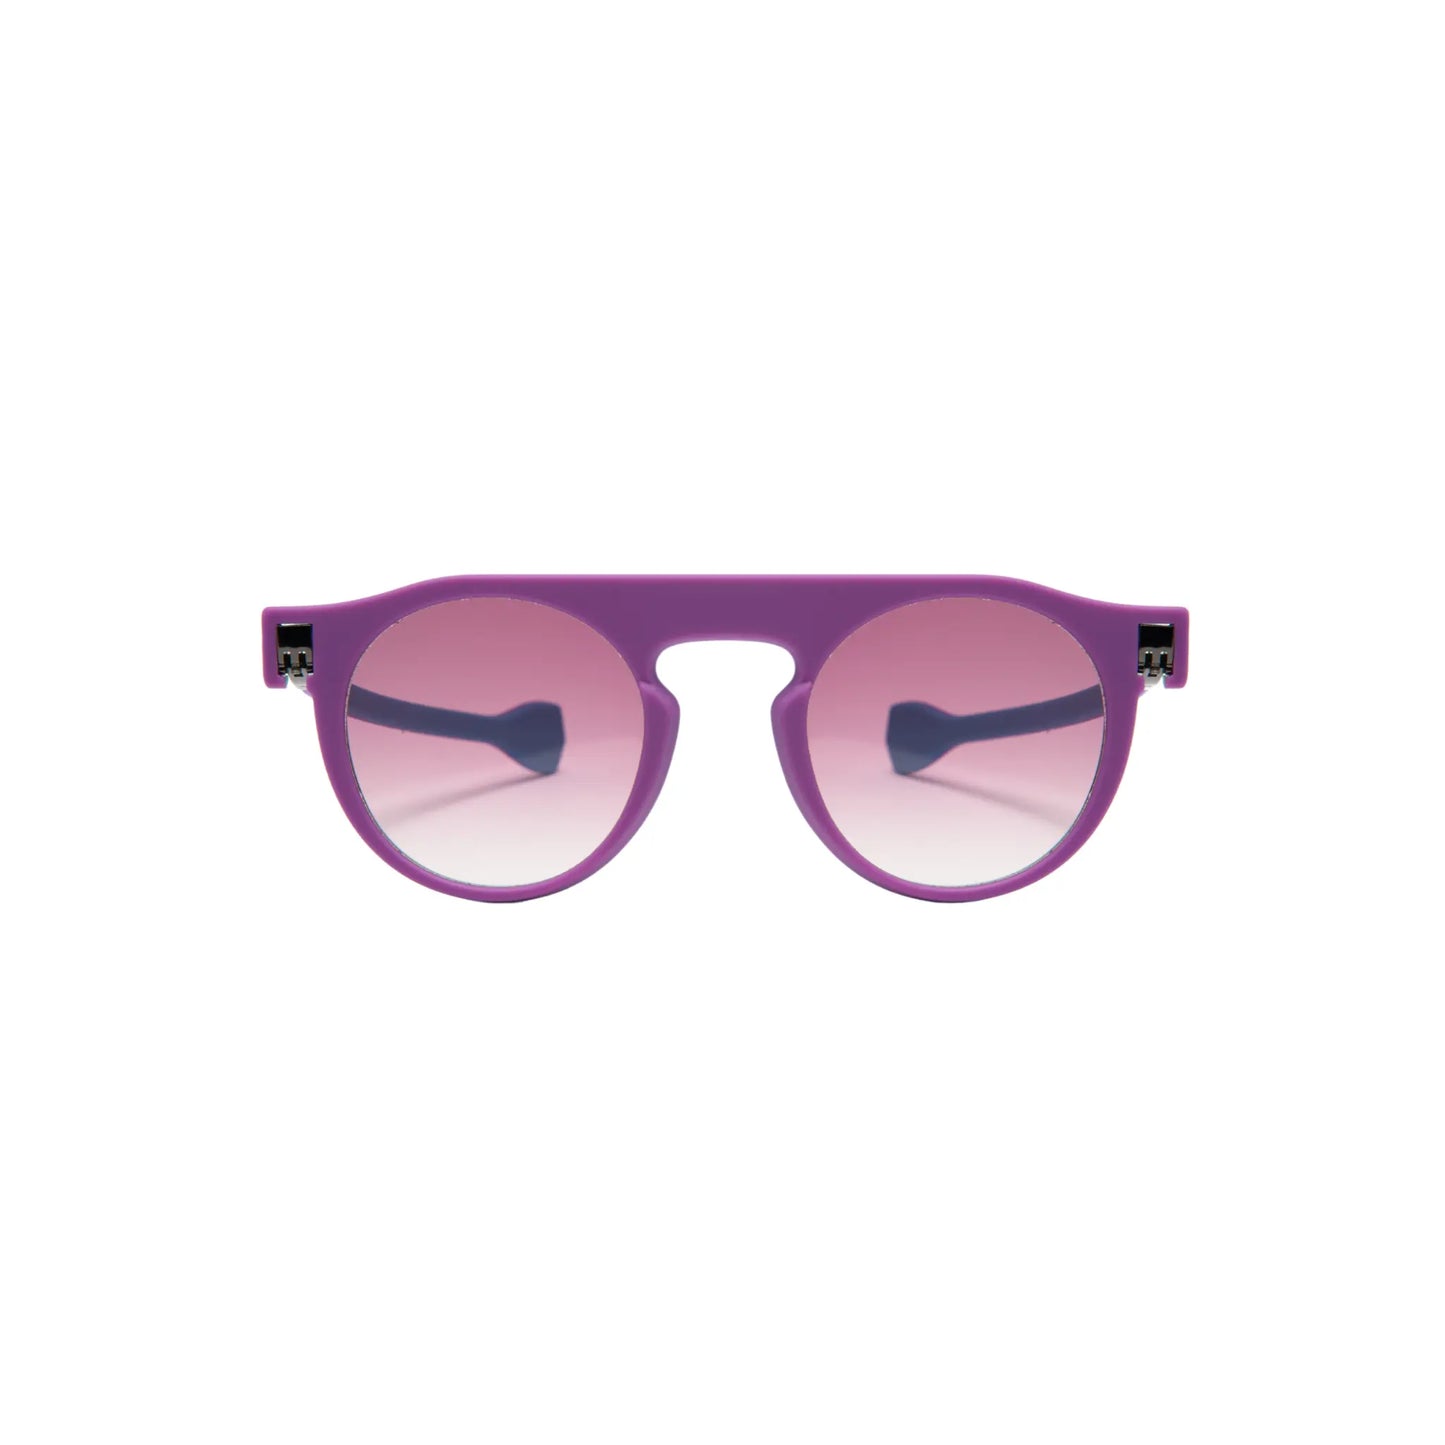 Reverso sunglasses violet & tiffany blue reversible & ultra light front view 2